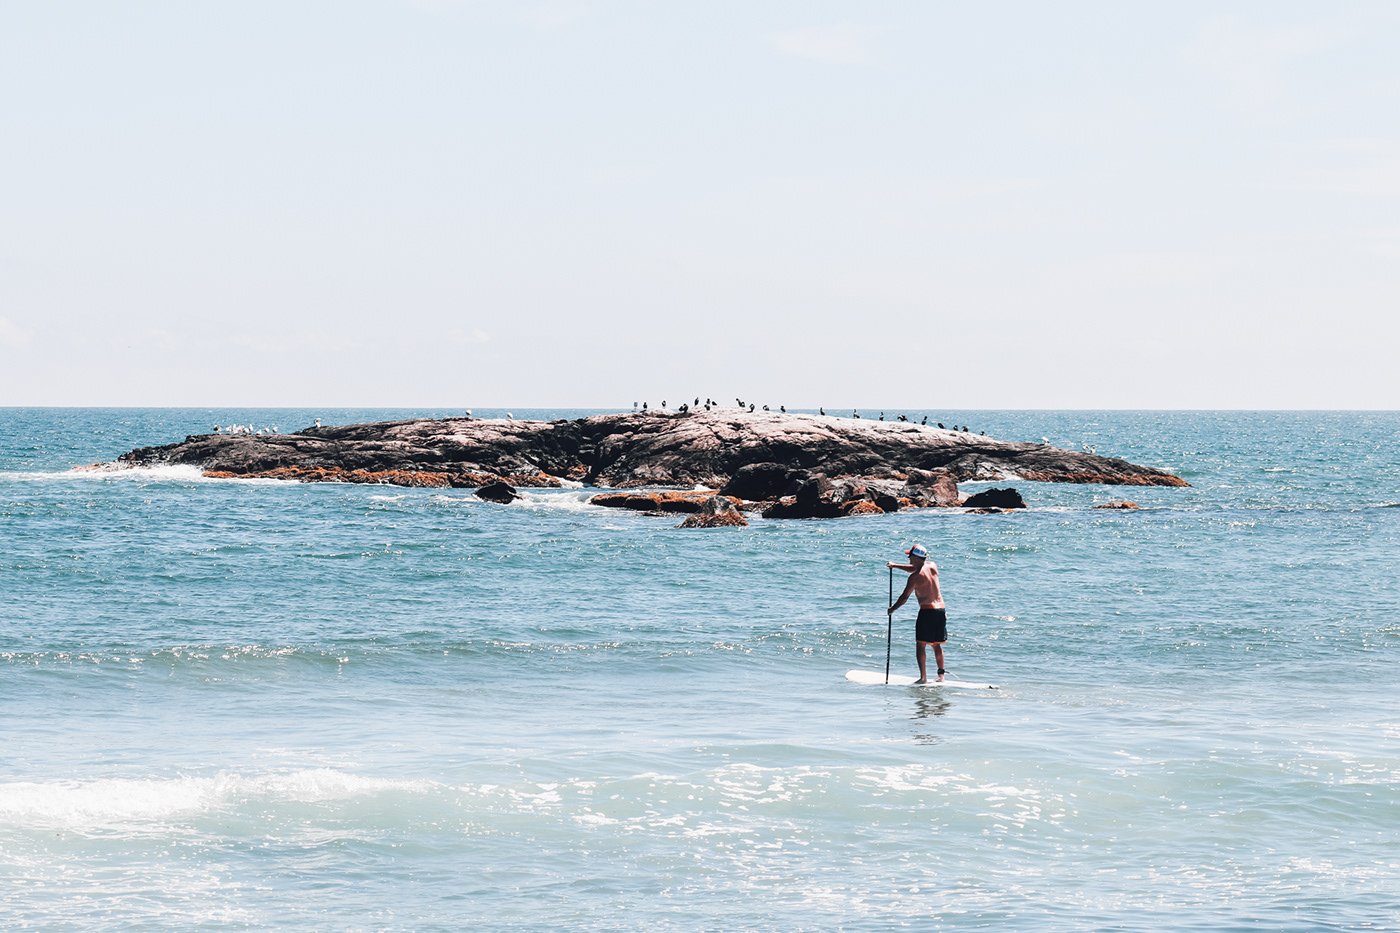 Ocean paddleboarding Rhode Island rocks Surf surfboard surfer waves